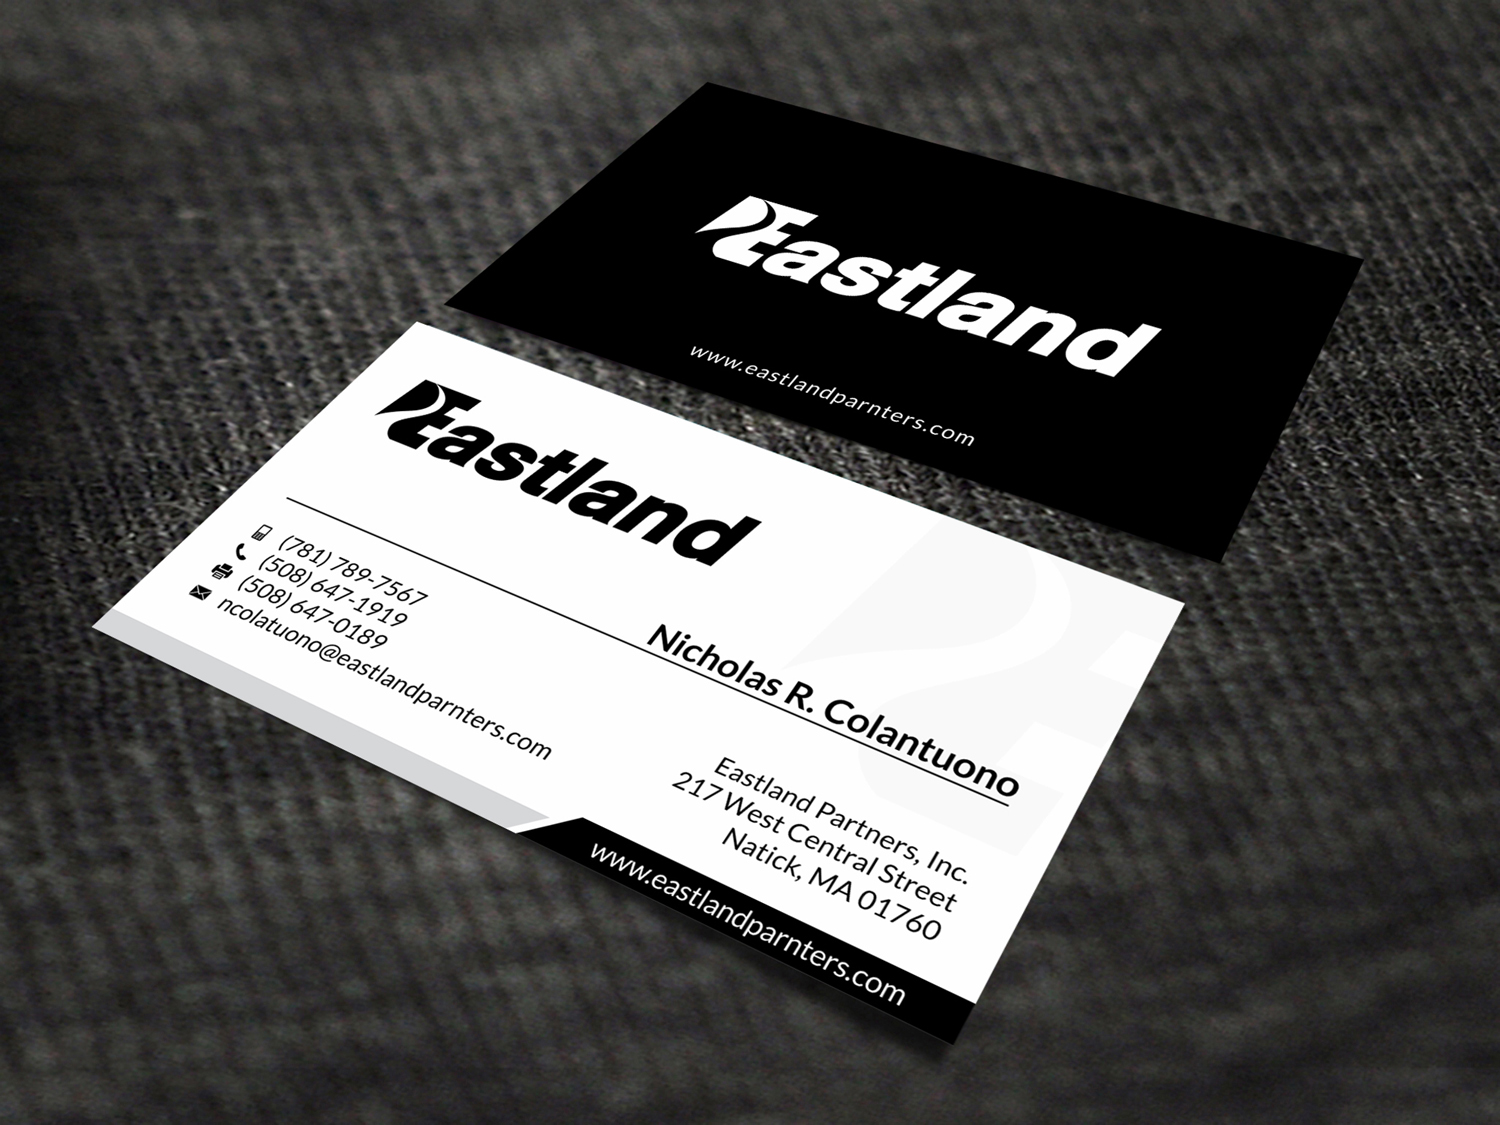 Business Card & Stationery Design entry 1336418 submitted by skyford412 to the Business Card & Stationery Design for Eastland Partners Inc.  run by eschollard